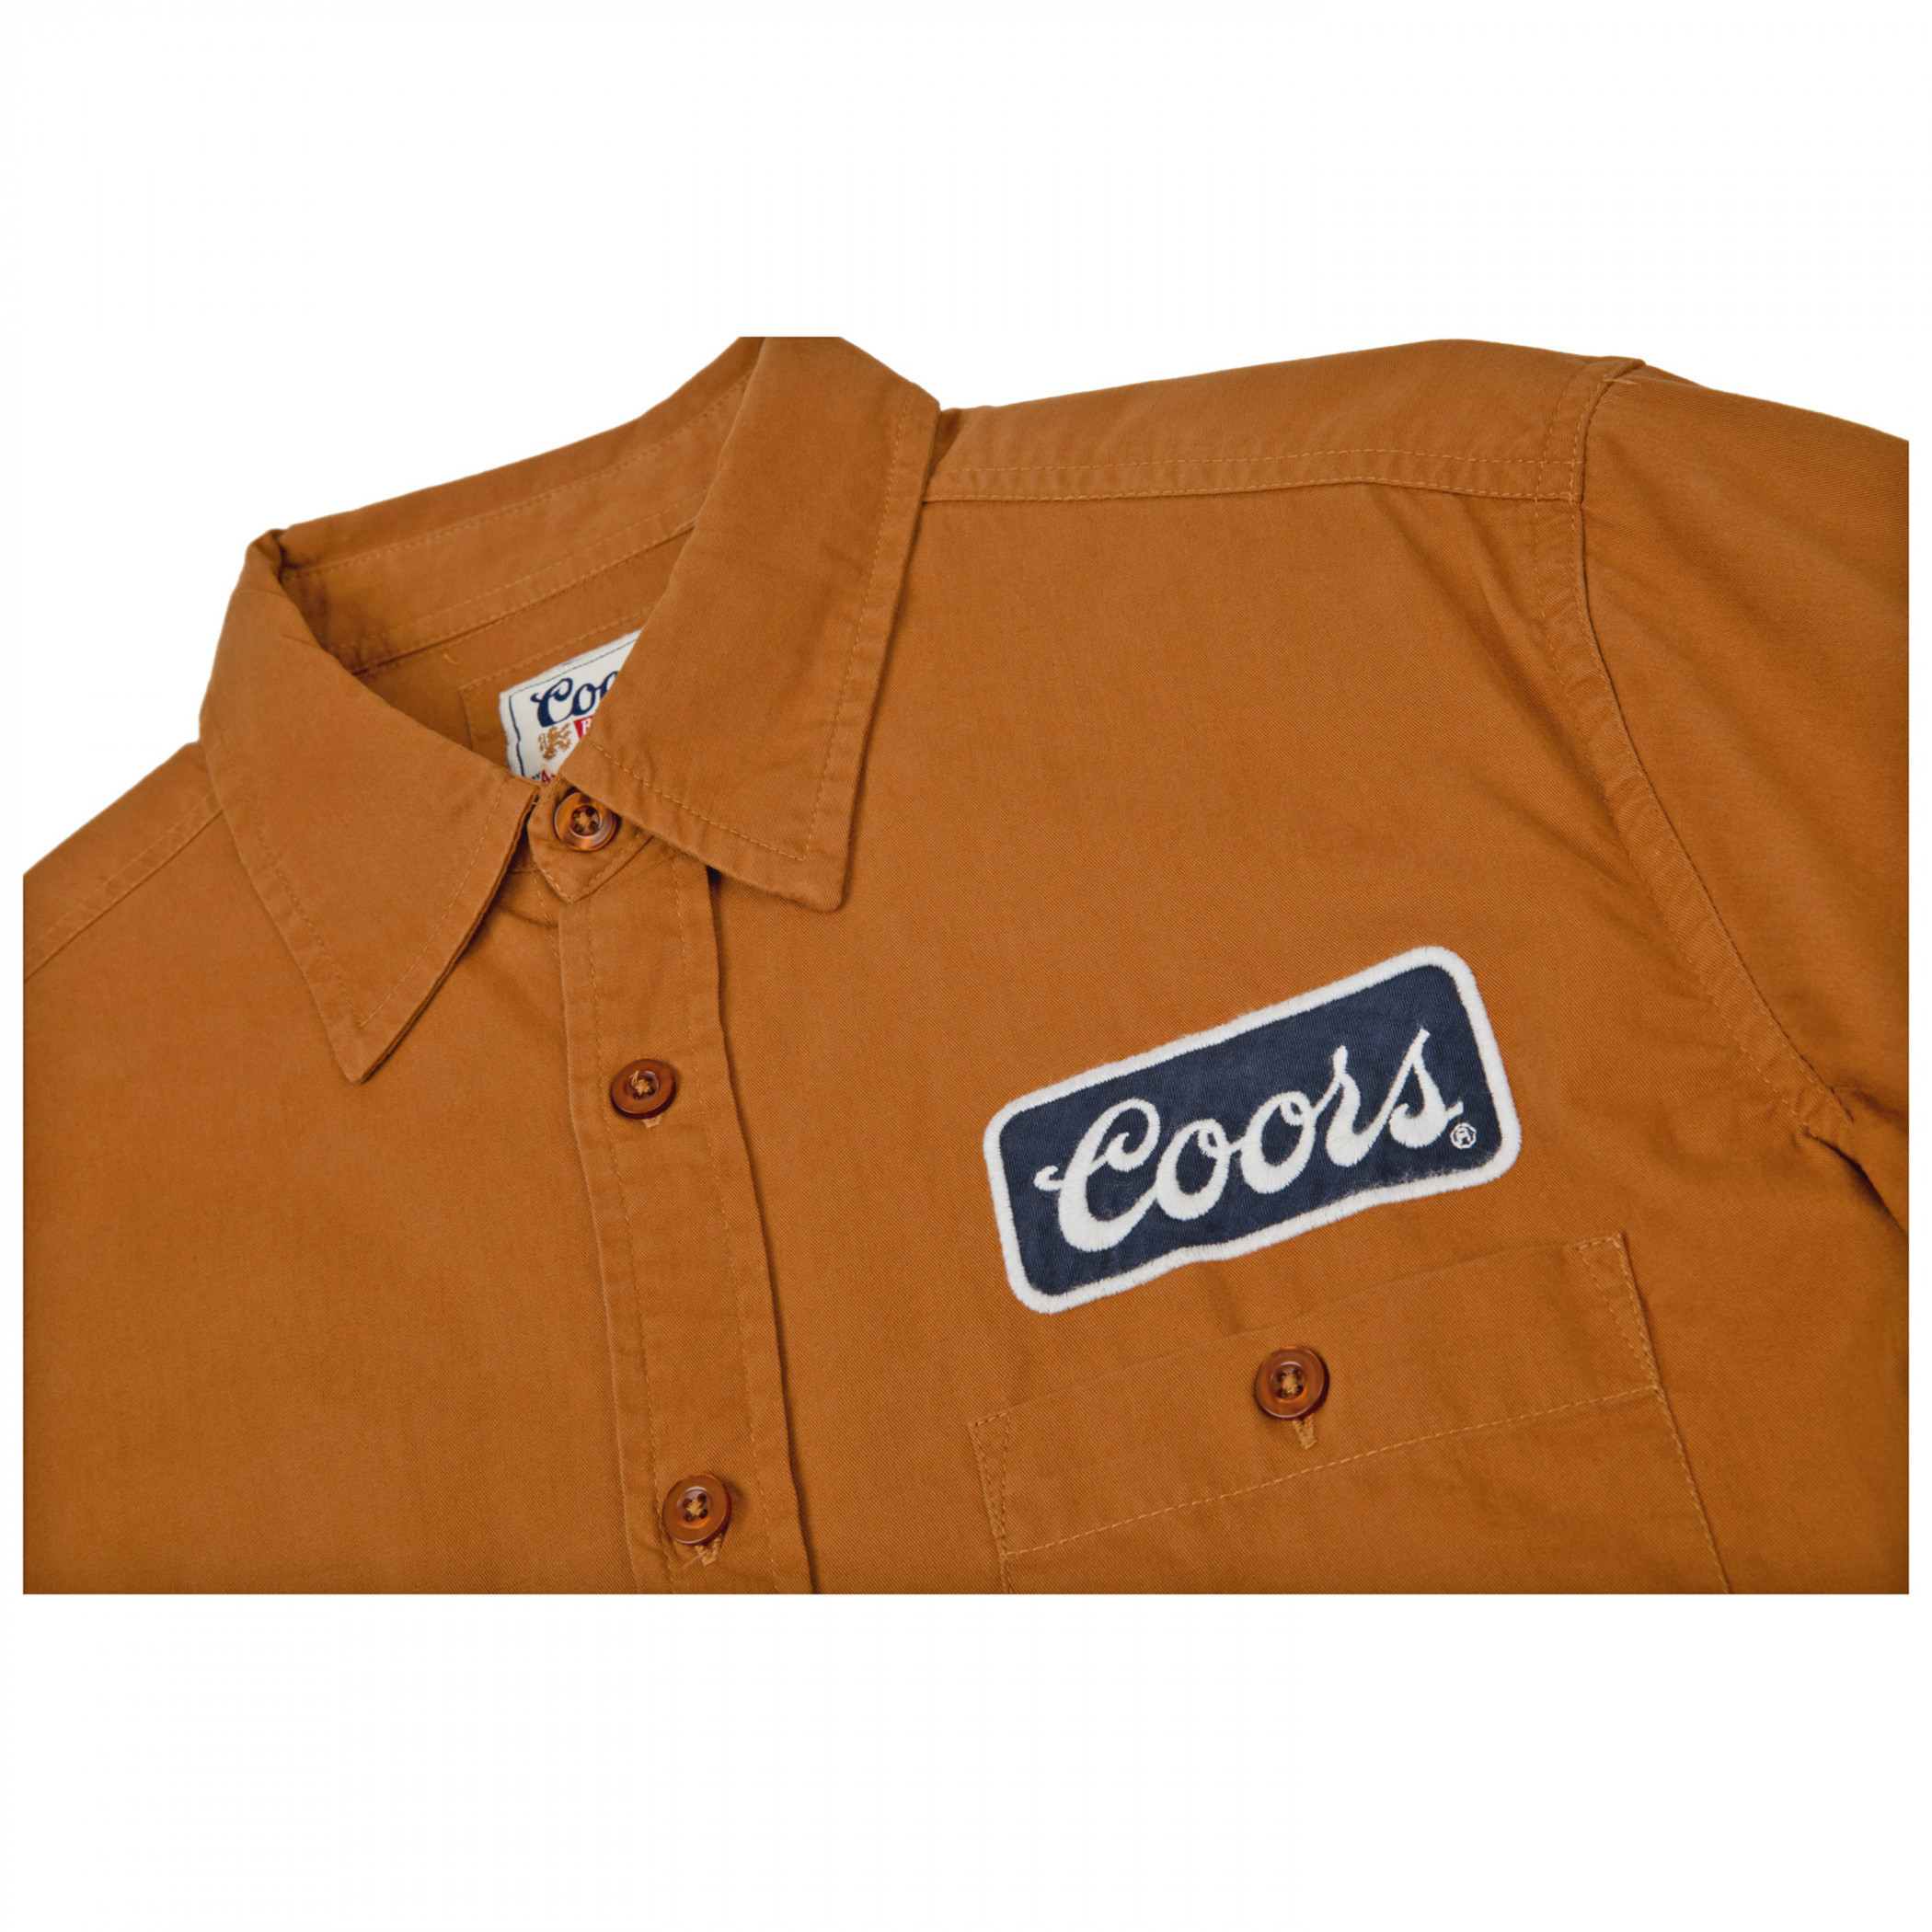 Coors Banquet Button Down Collared Shirt